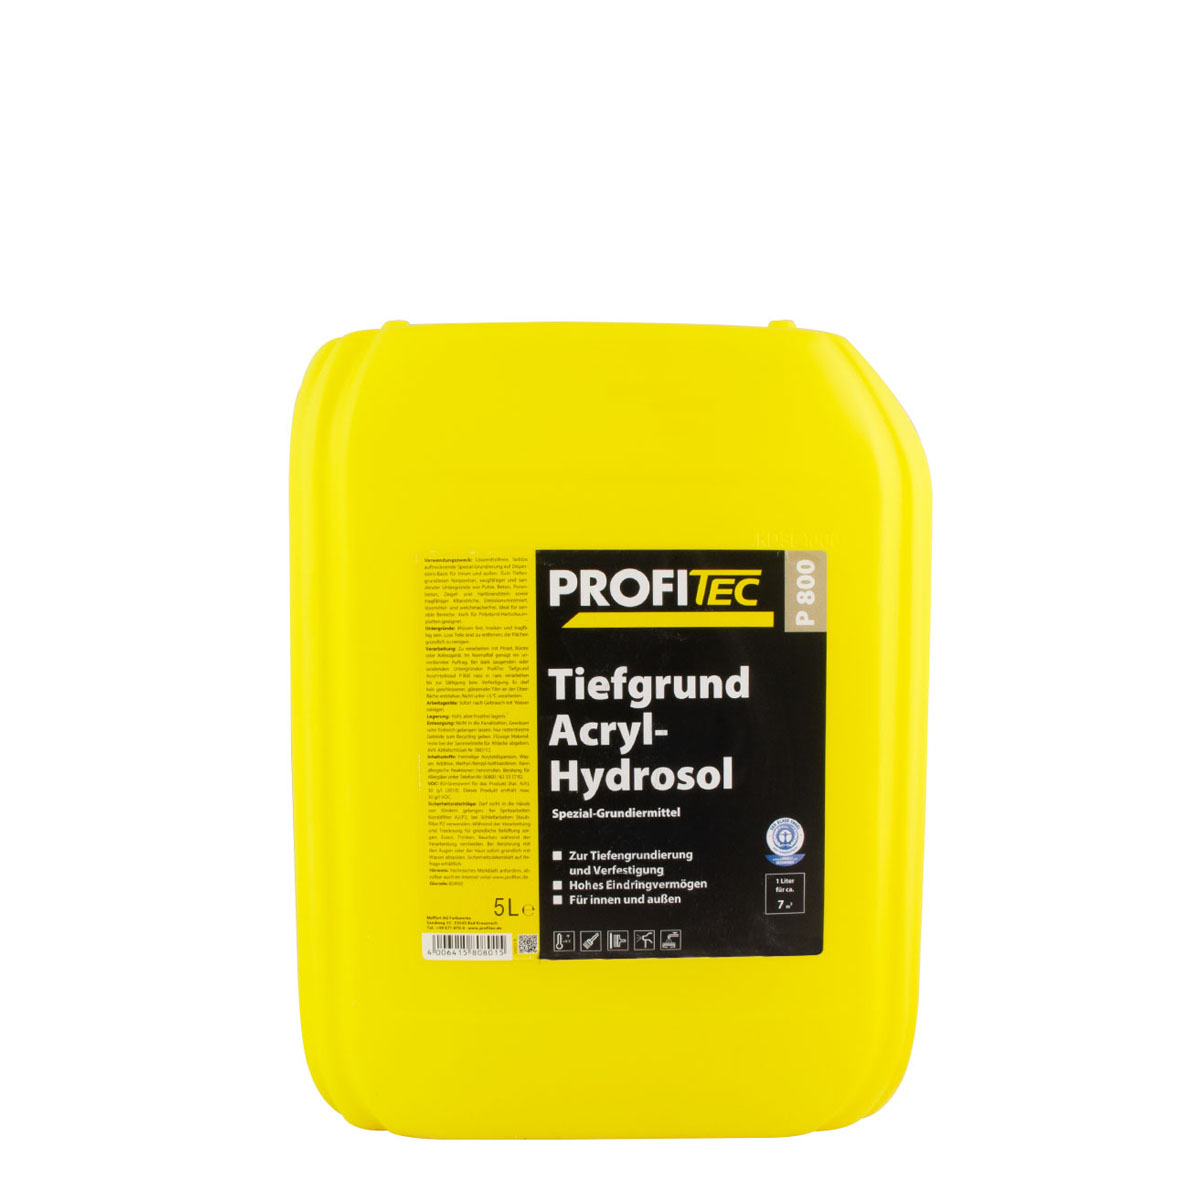 Profitec P800 Tiefgrund Acryl-Hydrosol 5L